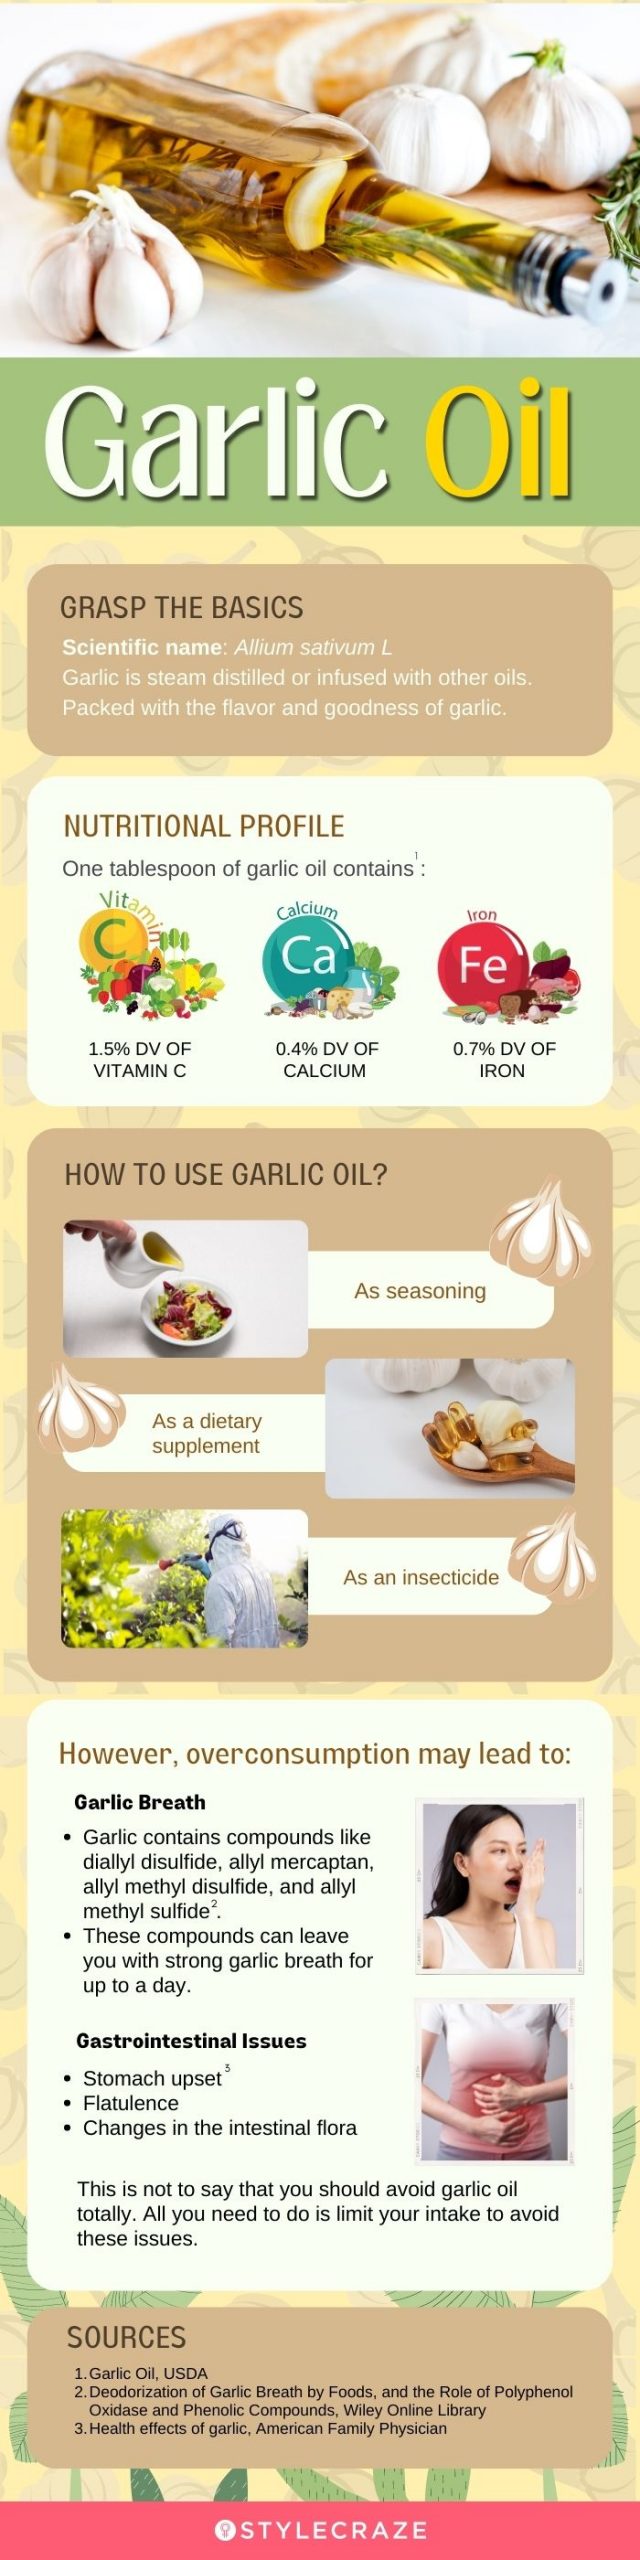 garlic oil [infographic]